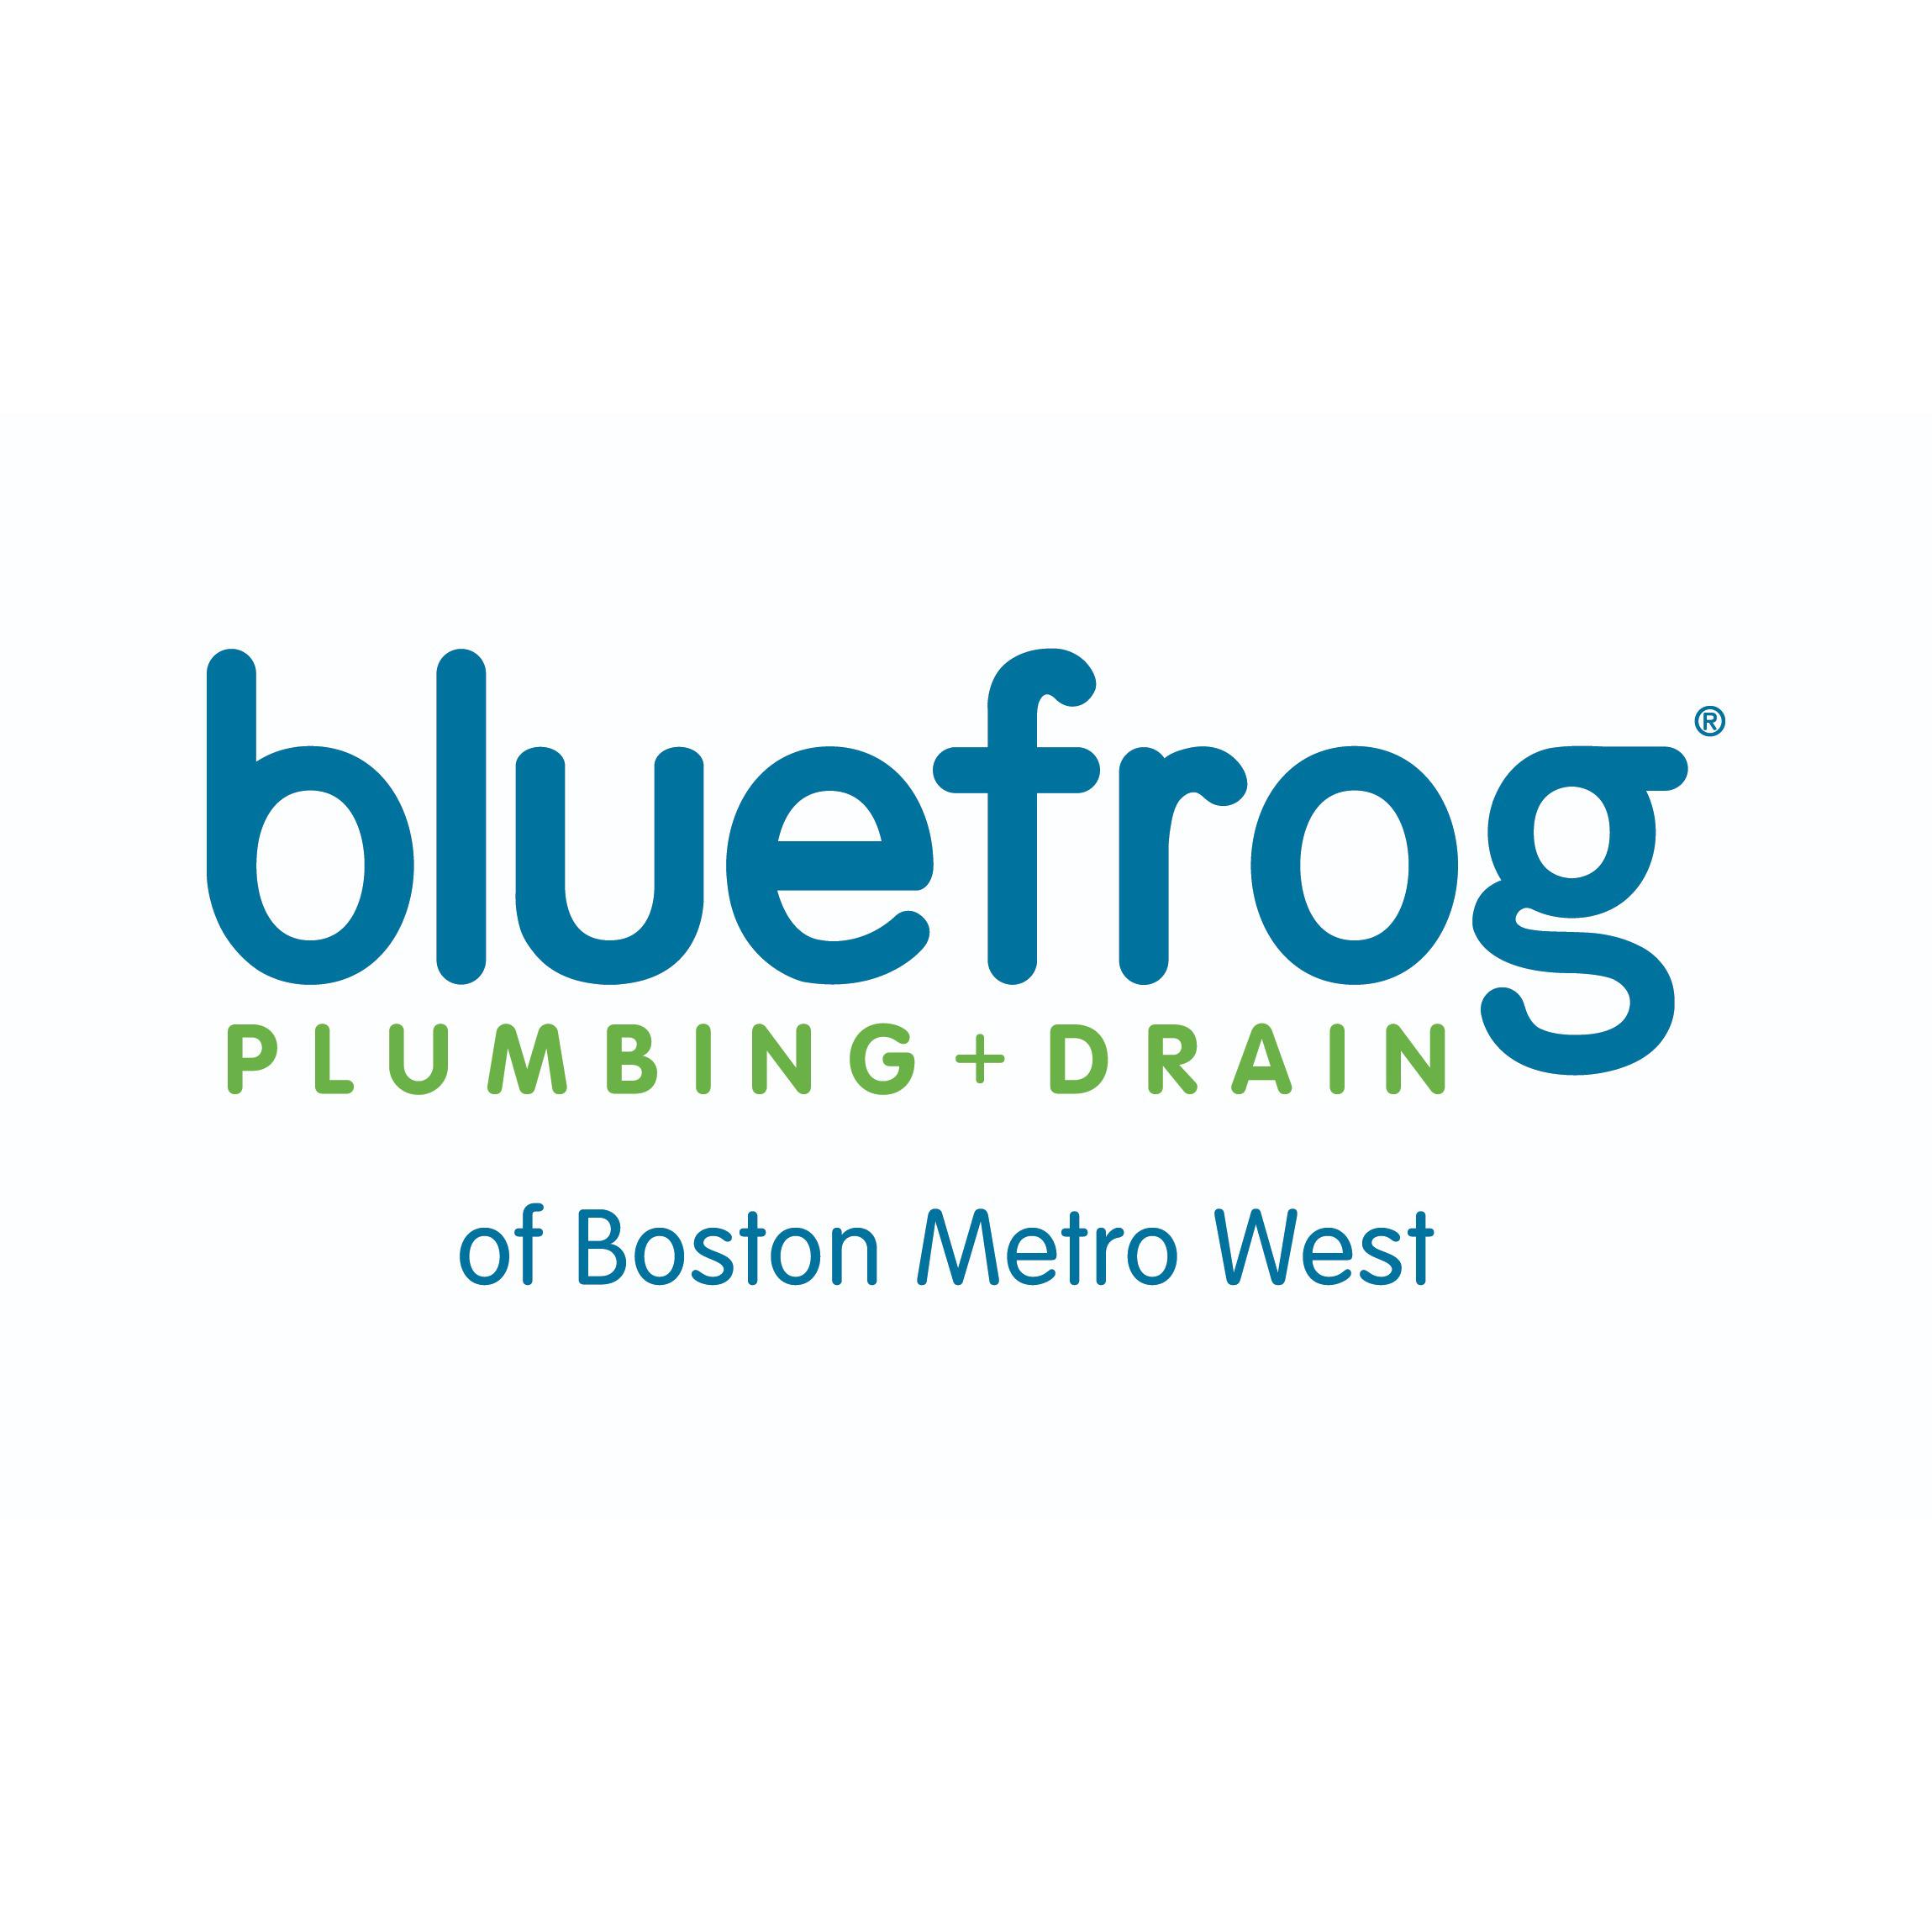 bluefrog Plumbing + Drain of Boston Metro West